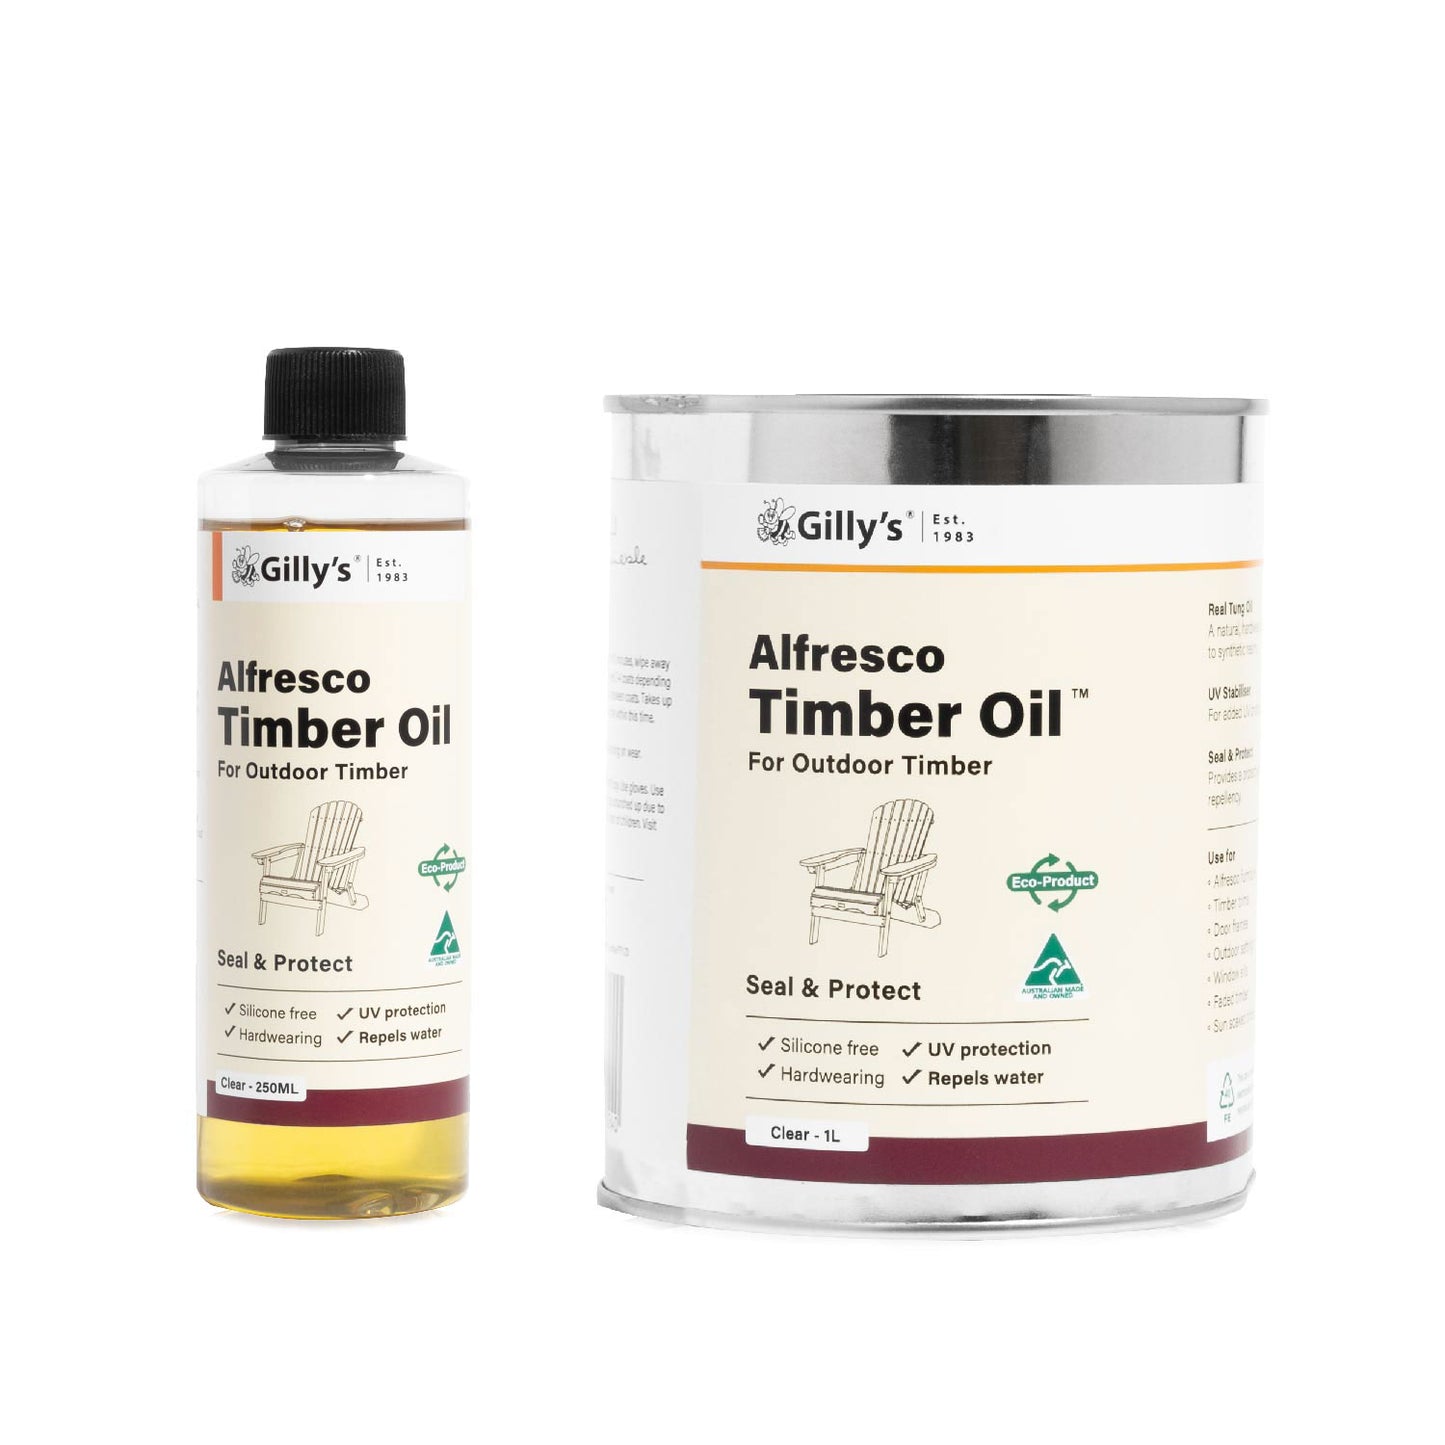 Alfresco Timber Oil